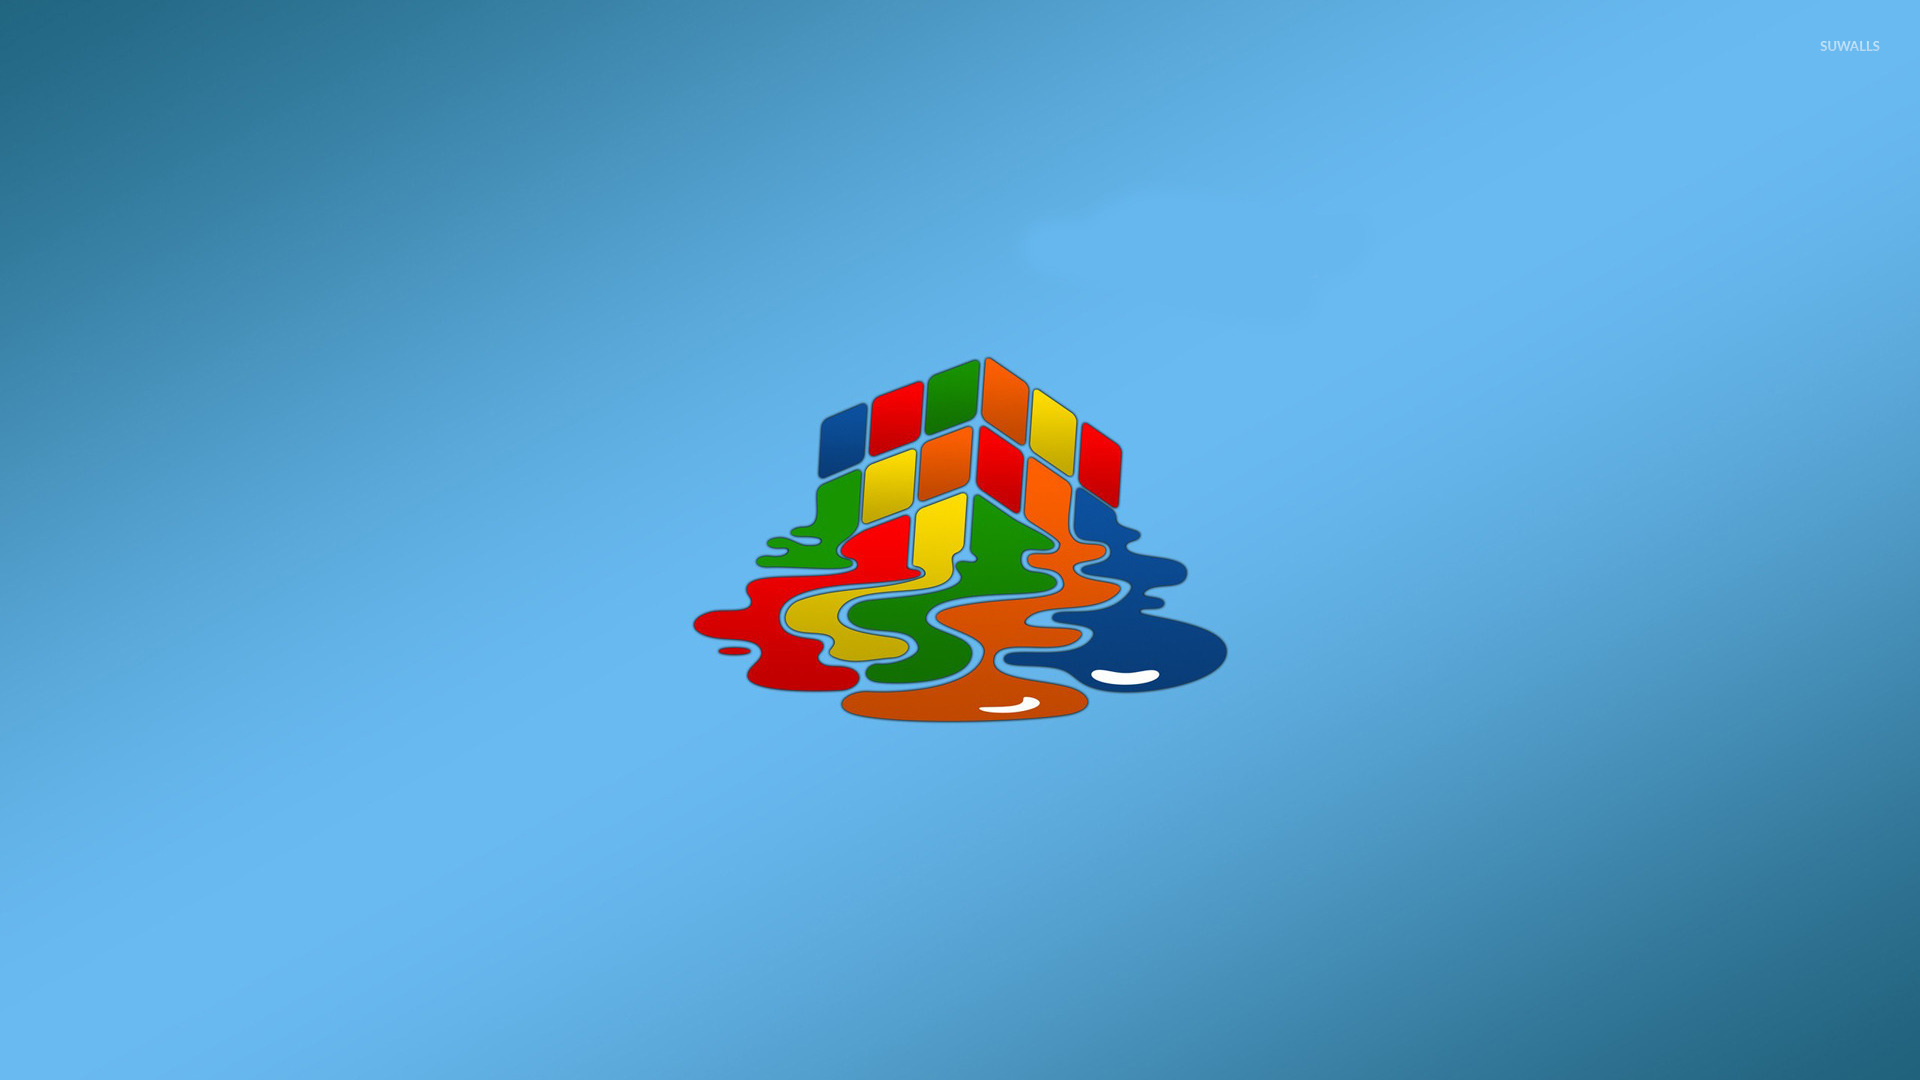 Melting Rubiks cube wallpaper   Minimalistic wallpapers   18070 1920x1080